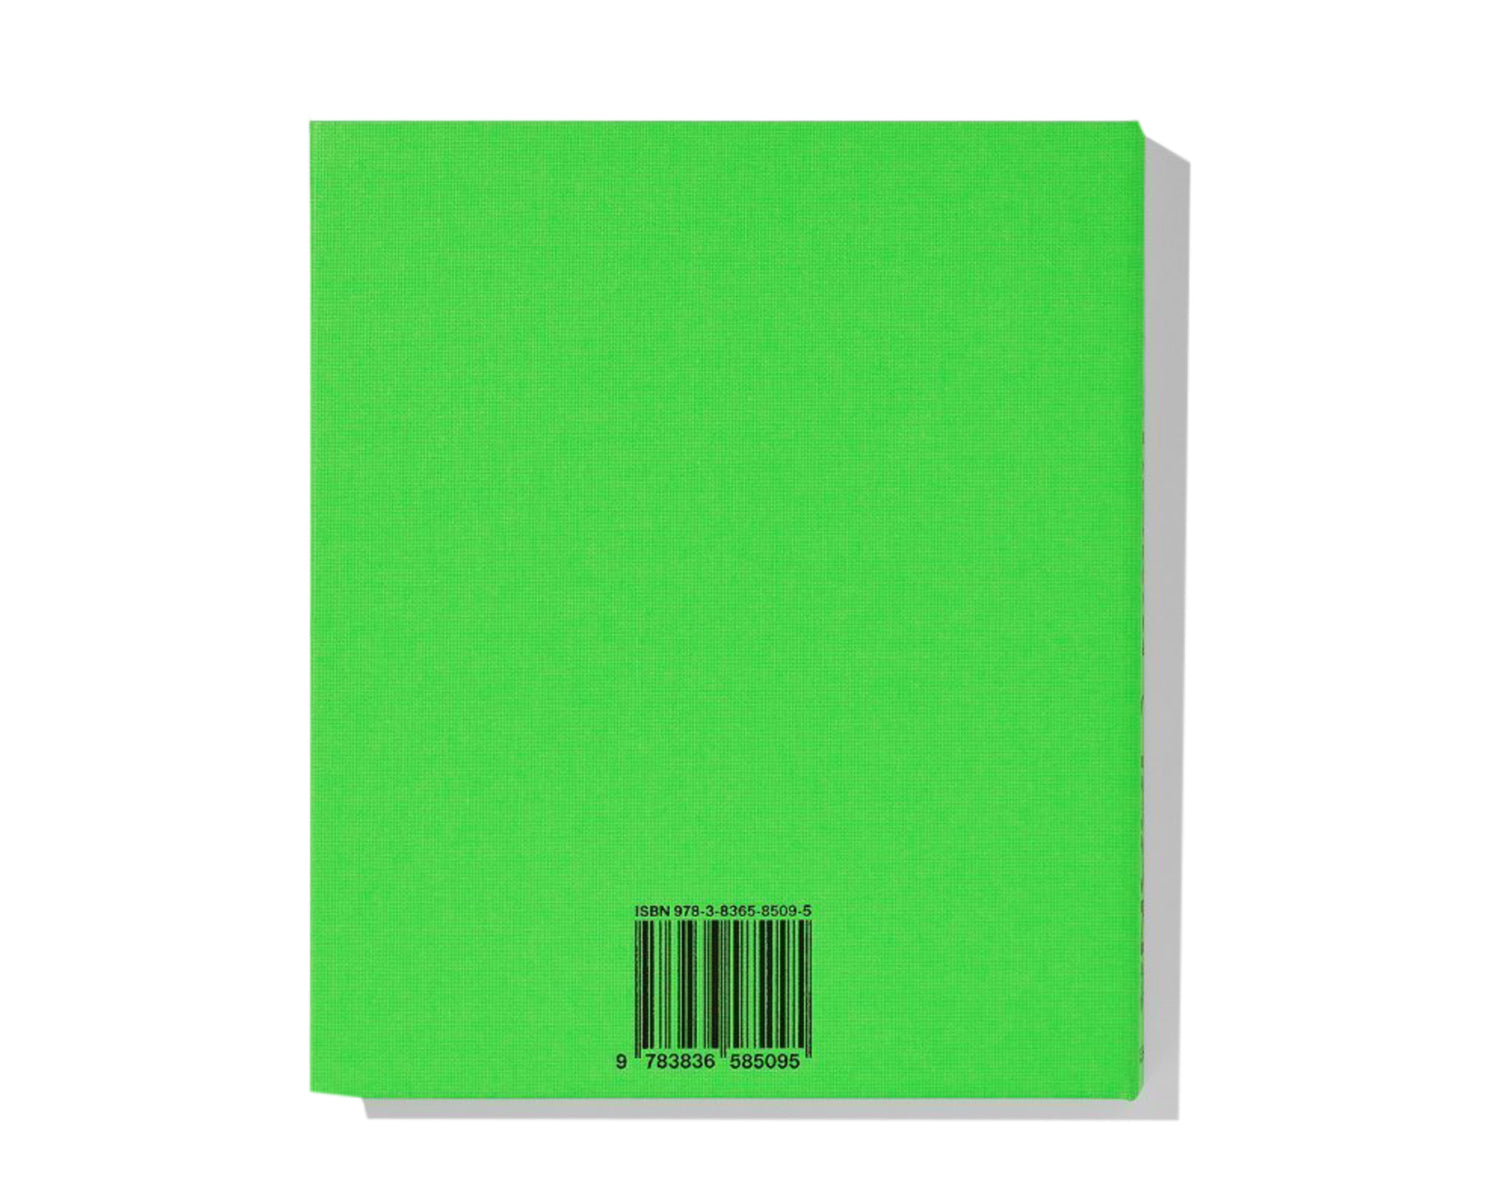 Taschen Books - Virgil Abloh - Nike - ICONS Hardcover Book